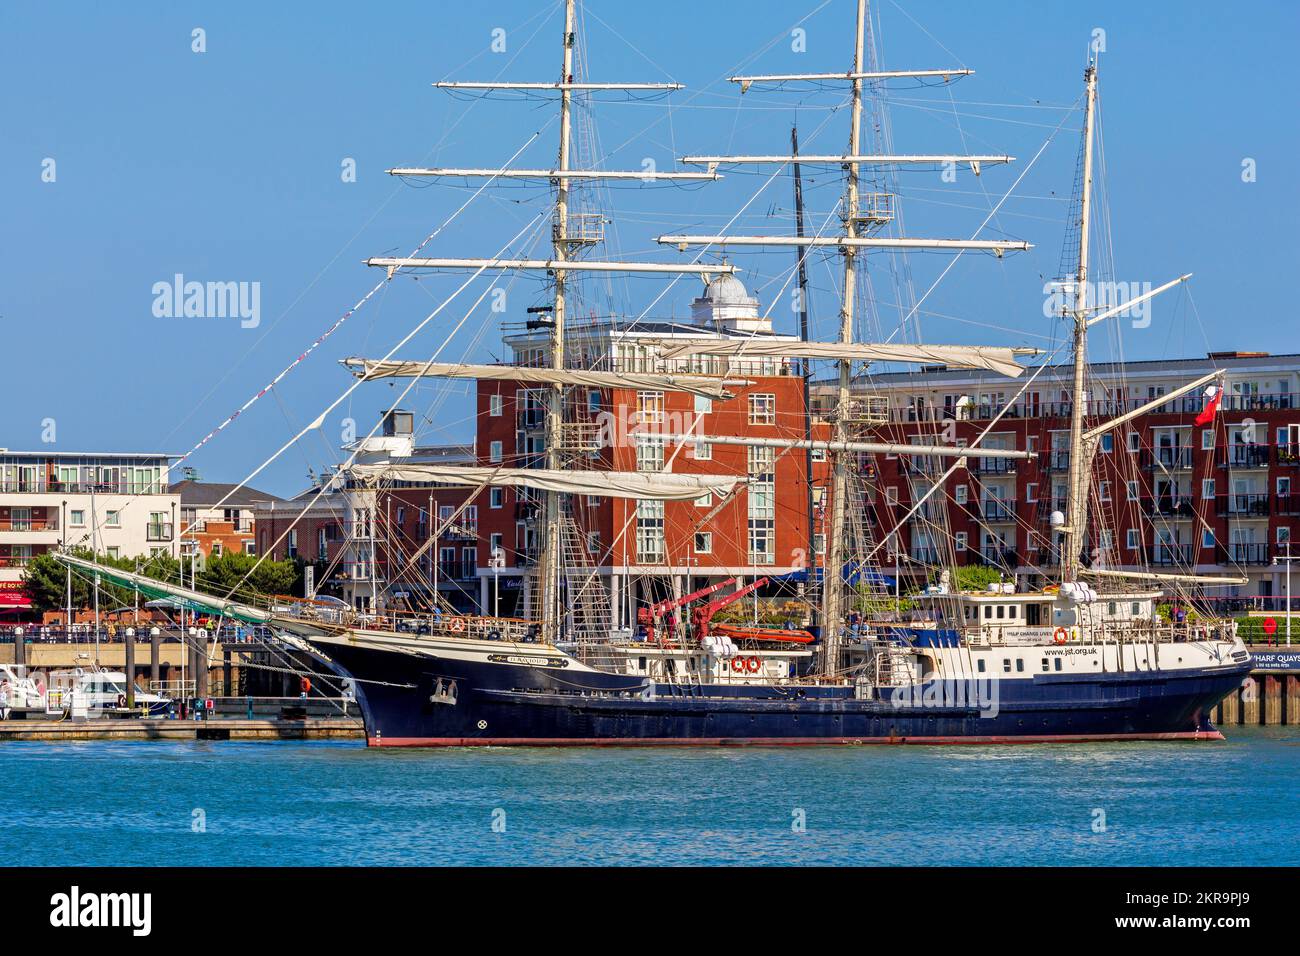 SV Tenacious, Gunwharf Quay, Portsmouth Harbour, Hampshire, England, United Kingdom Stock Photo